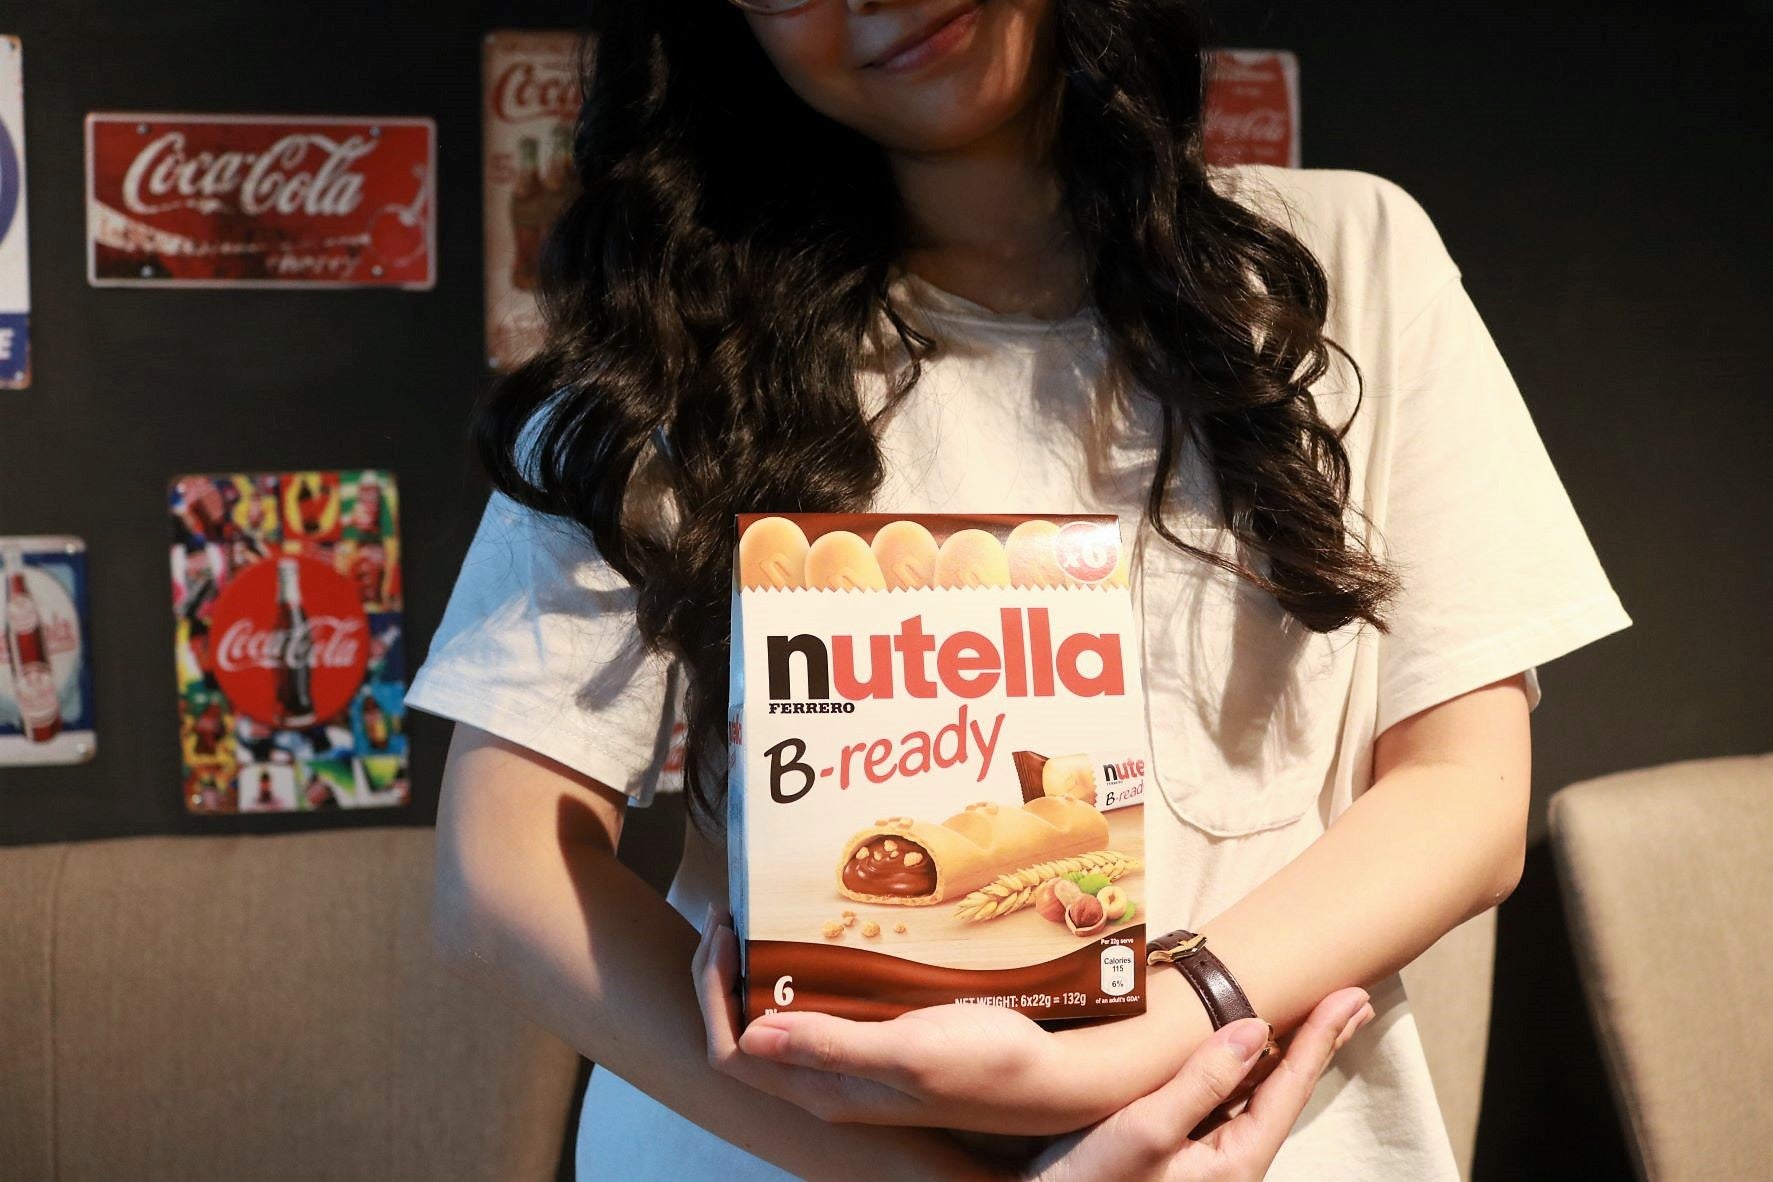 NutellaBready Box pose